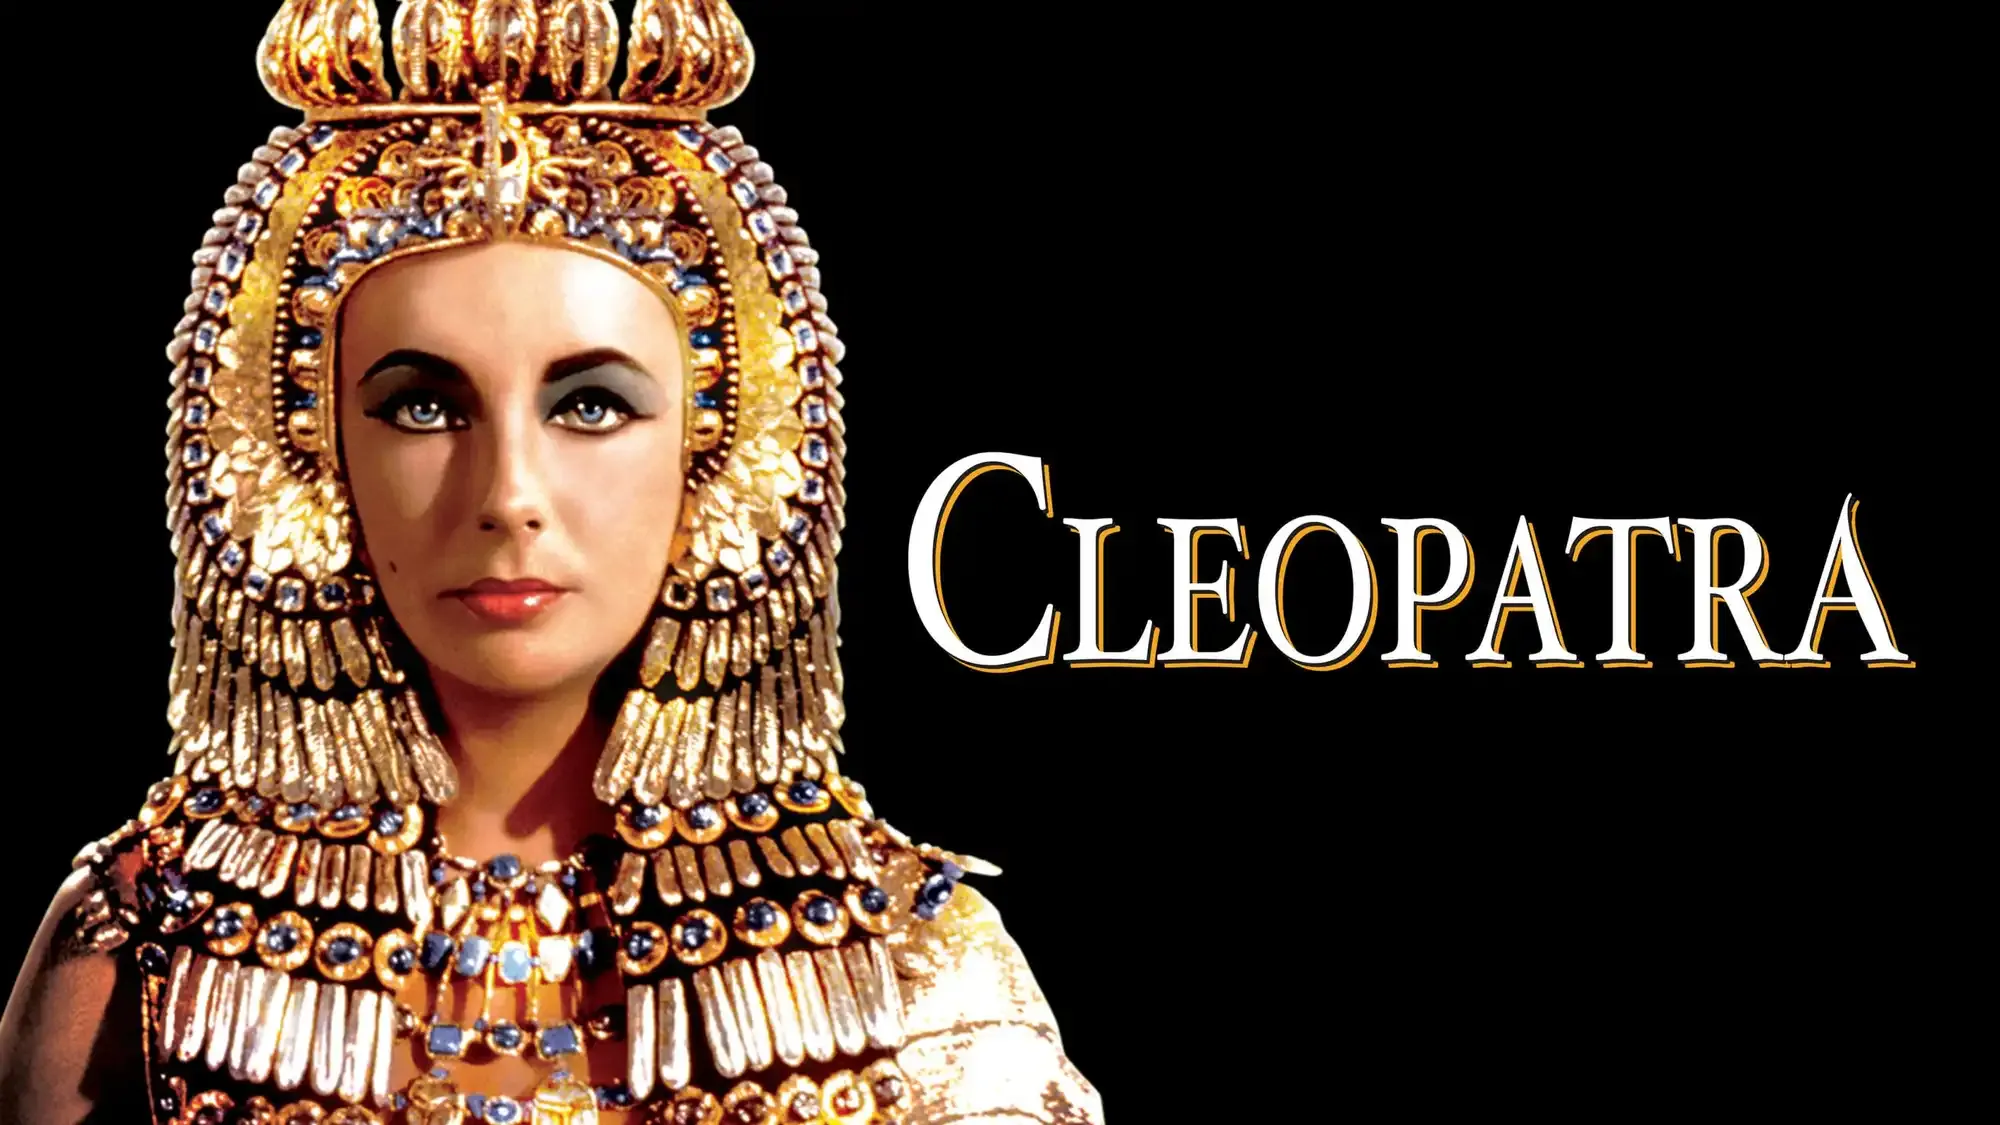 Cleopatra movie review